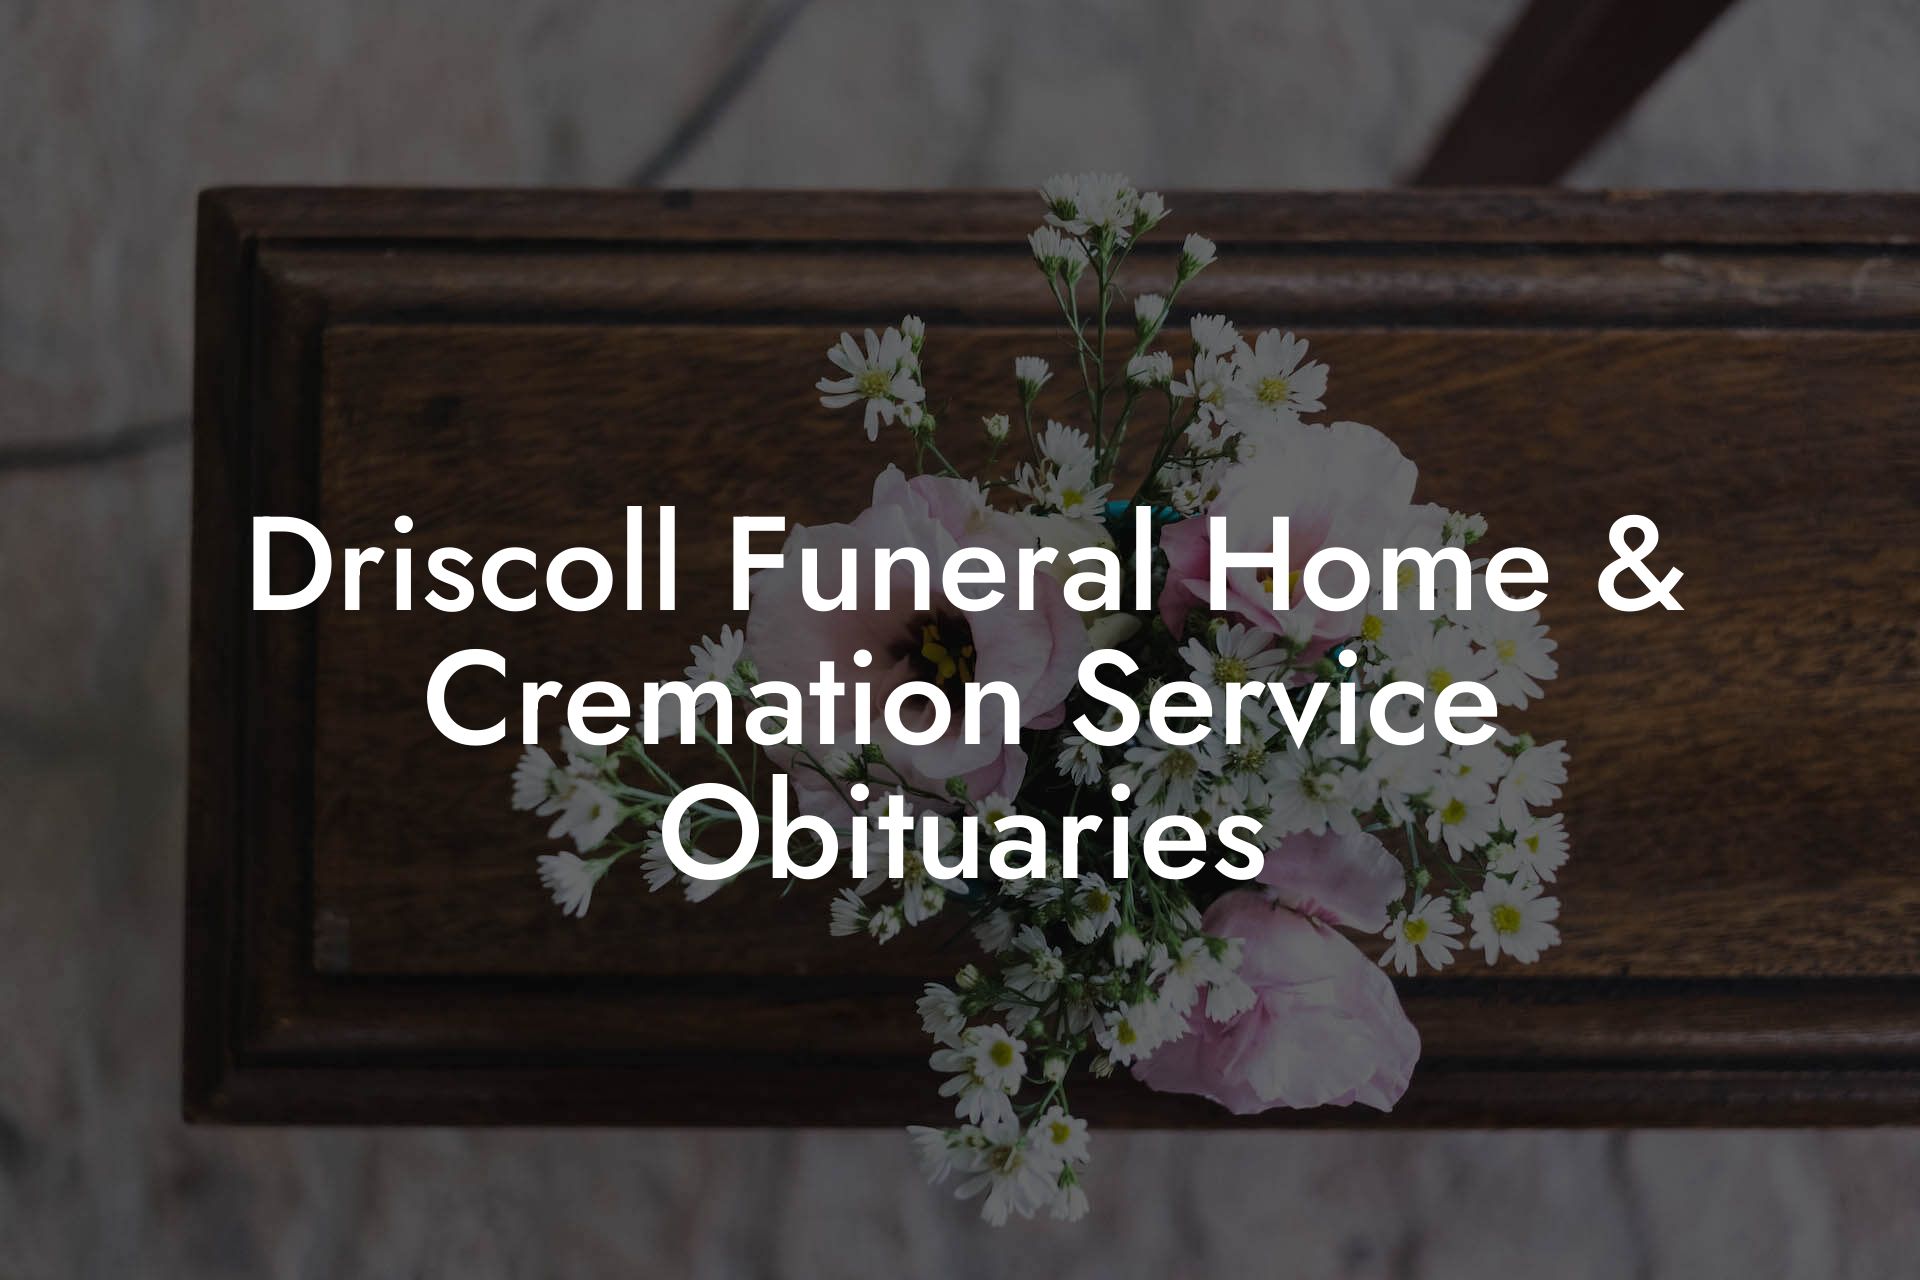 Driscoll Funeral Home & Cremation Service Obituaries